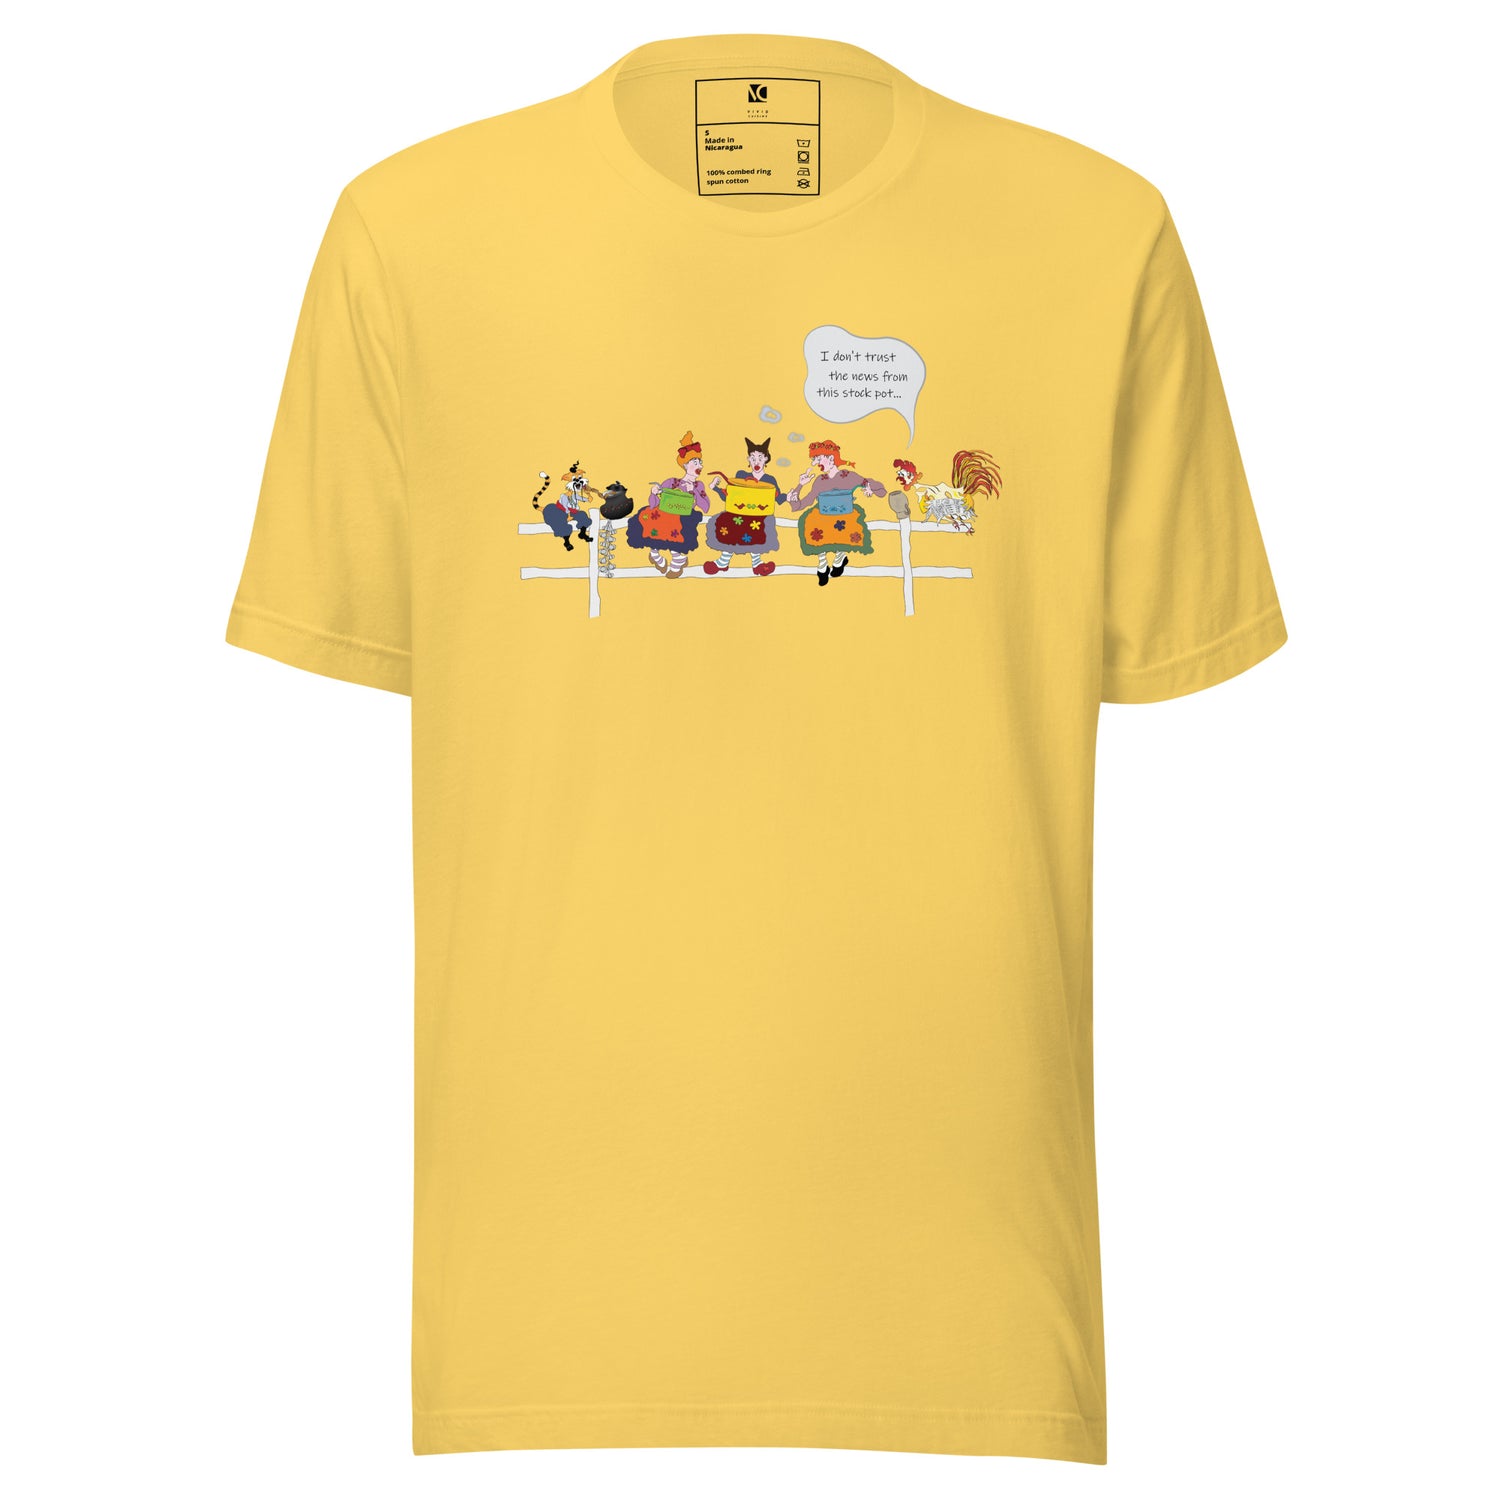 Ukrainian Summer - Unisex T-Shirt